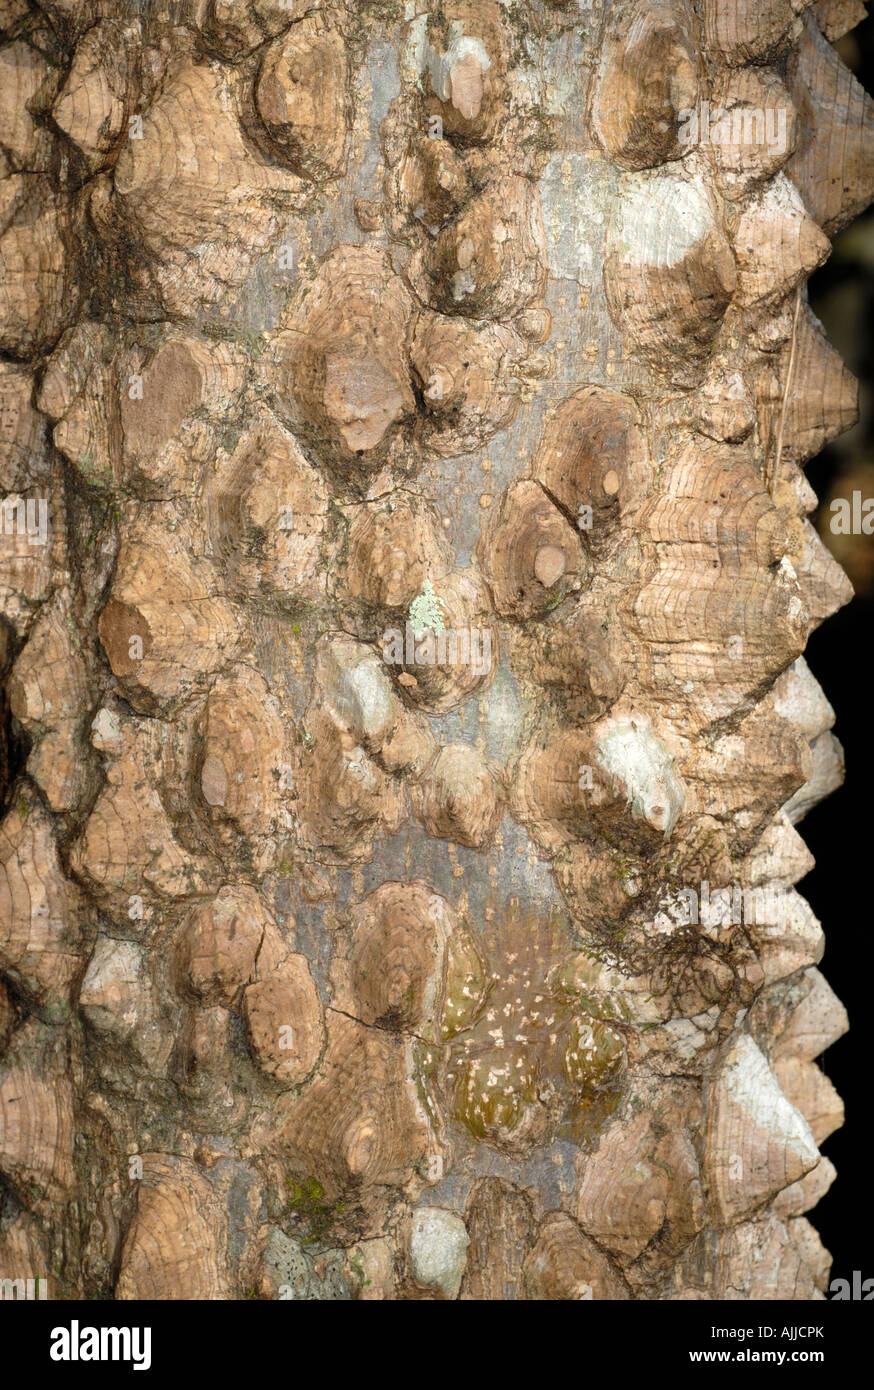 closeup view of the rough bark of the hercules club tree Stock Photo